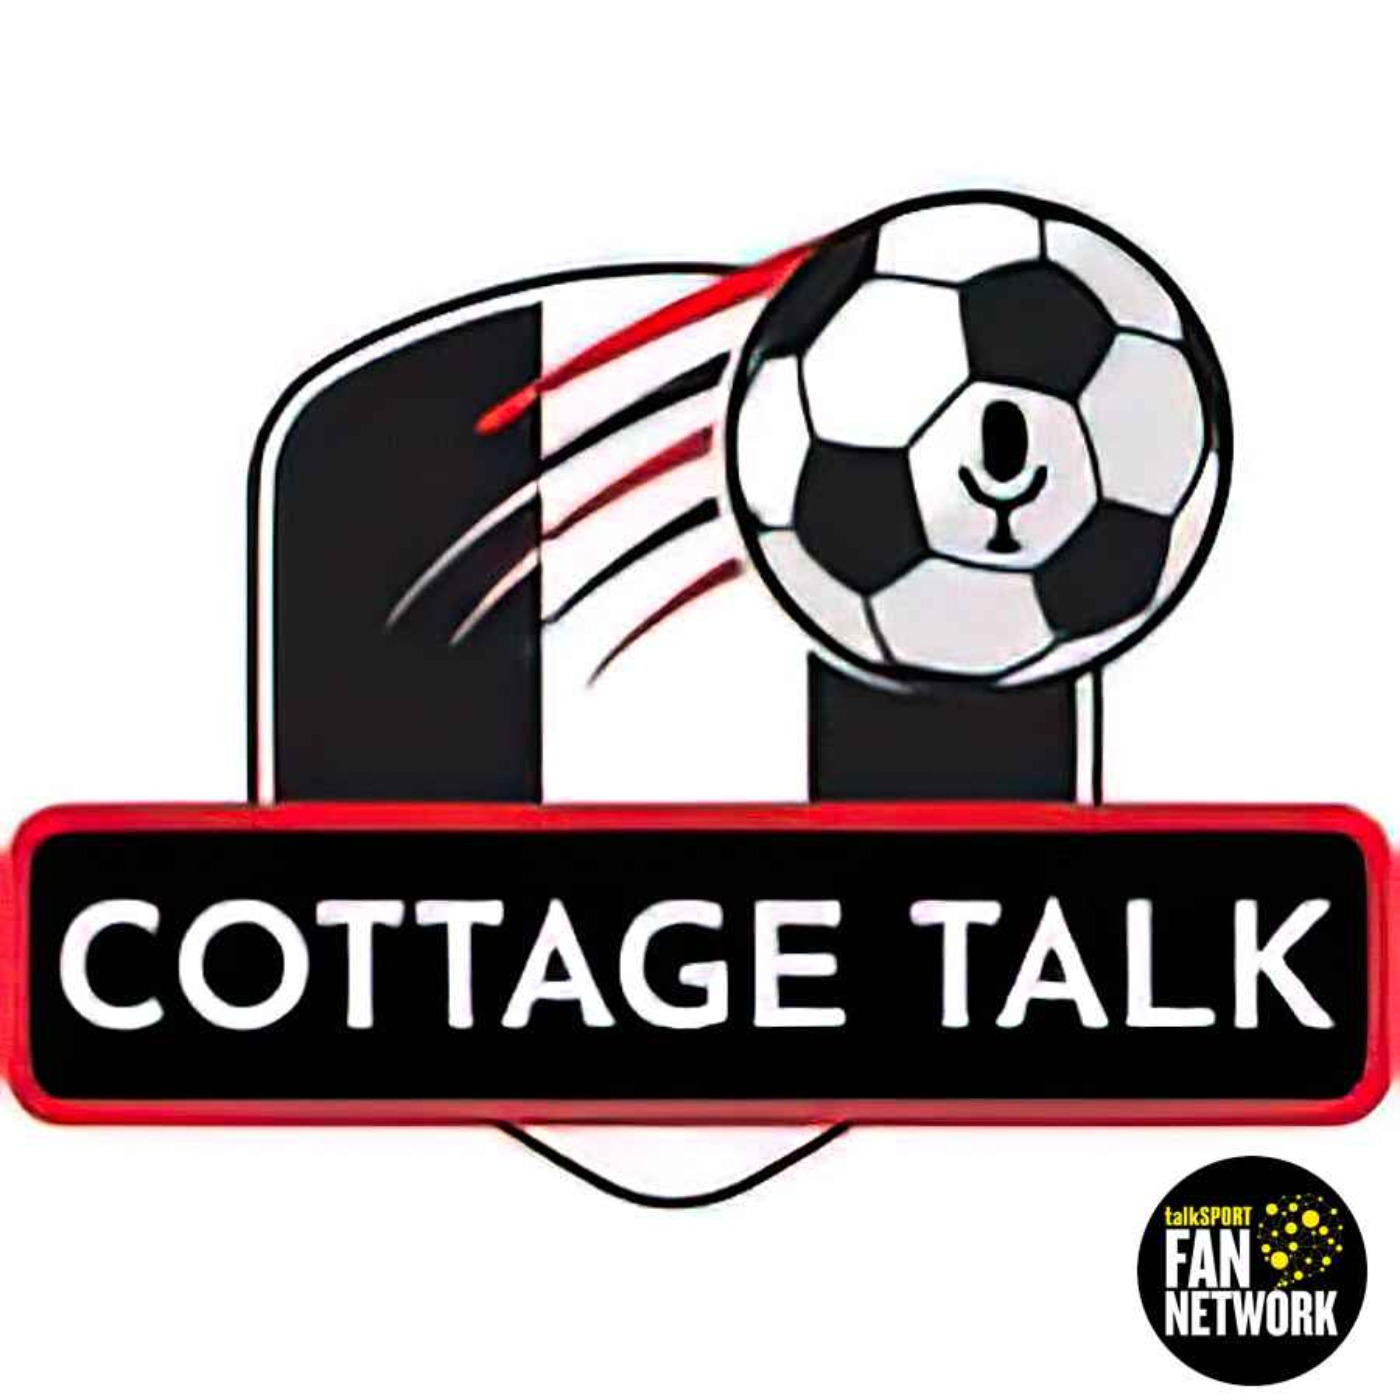 Cottage Talk Preview: West Ham vs. Fulham